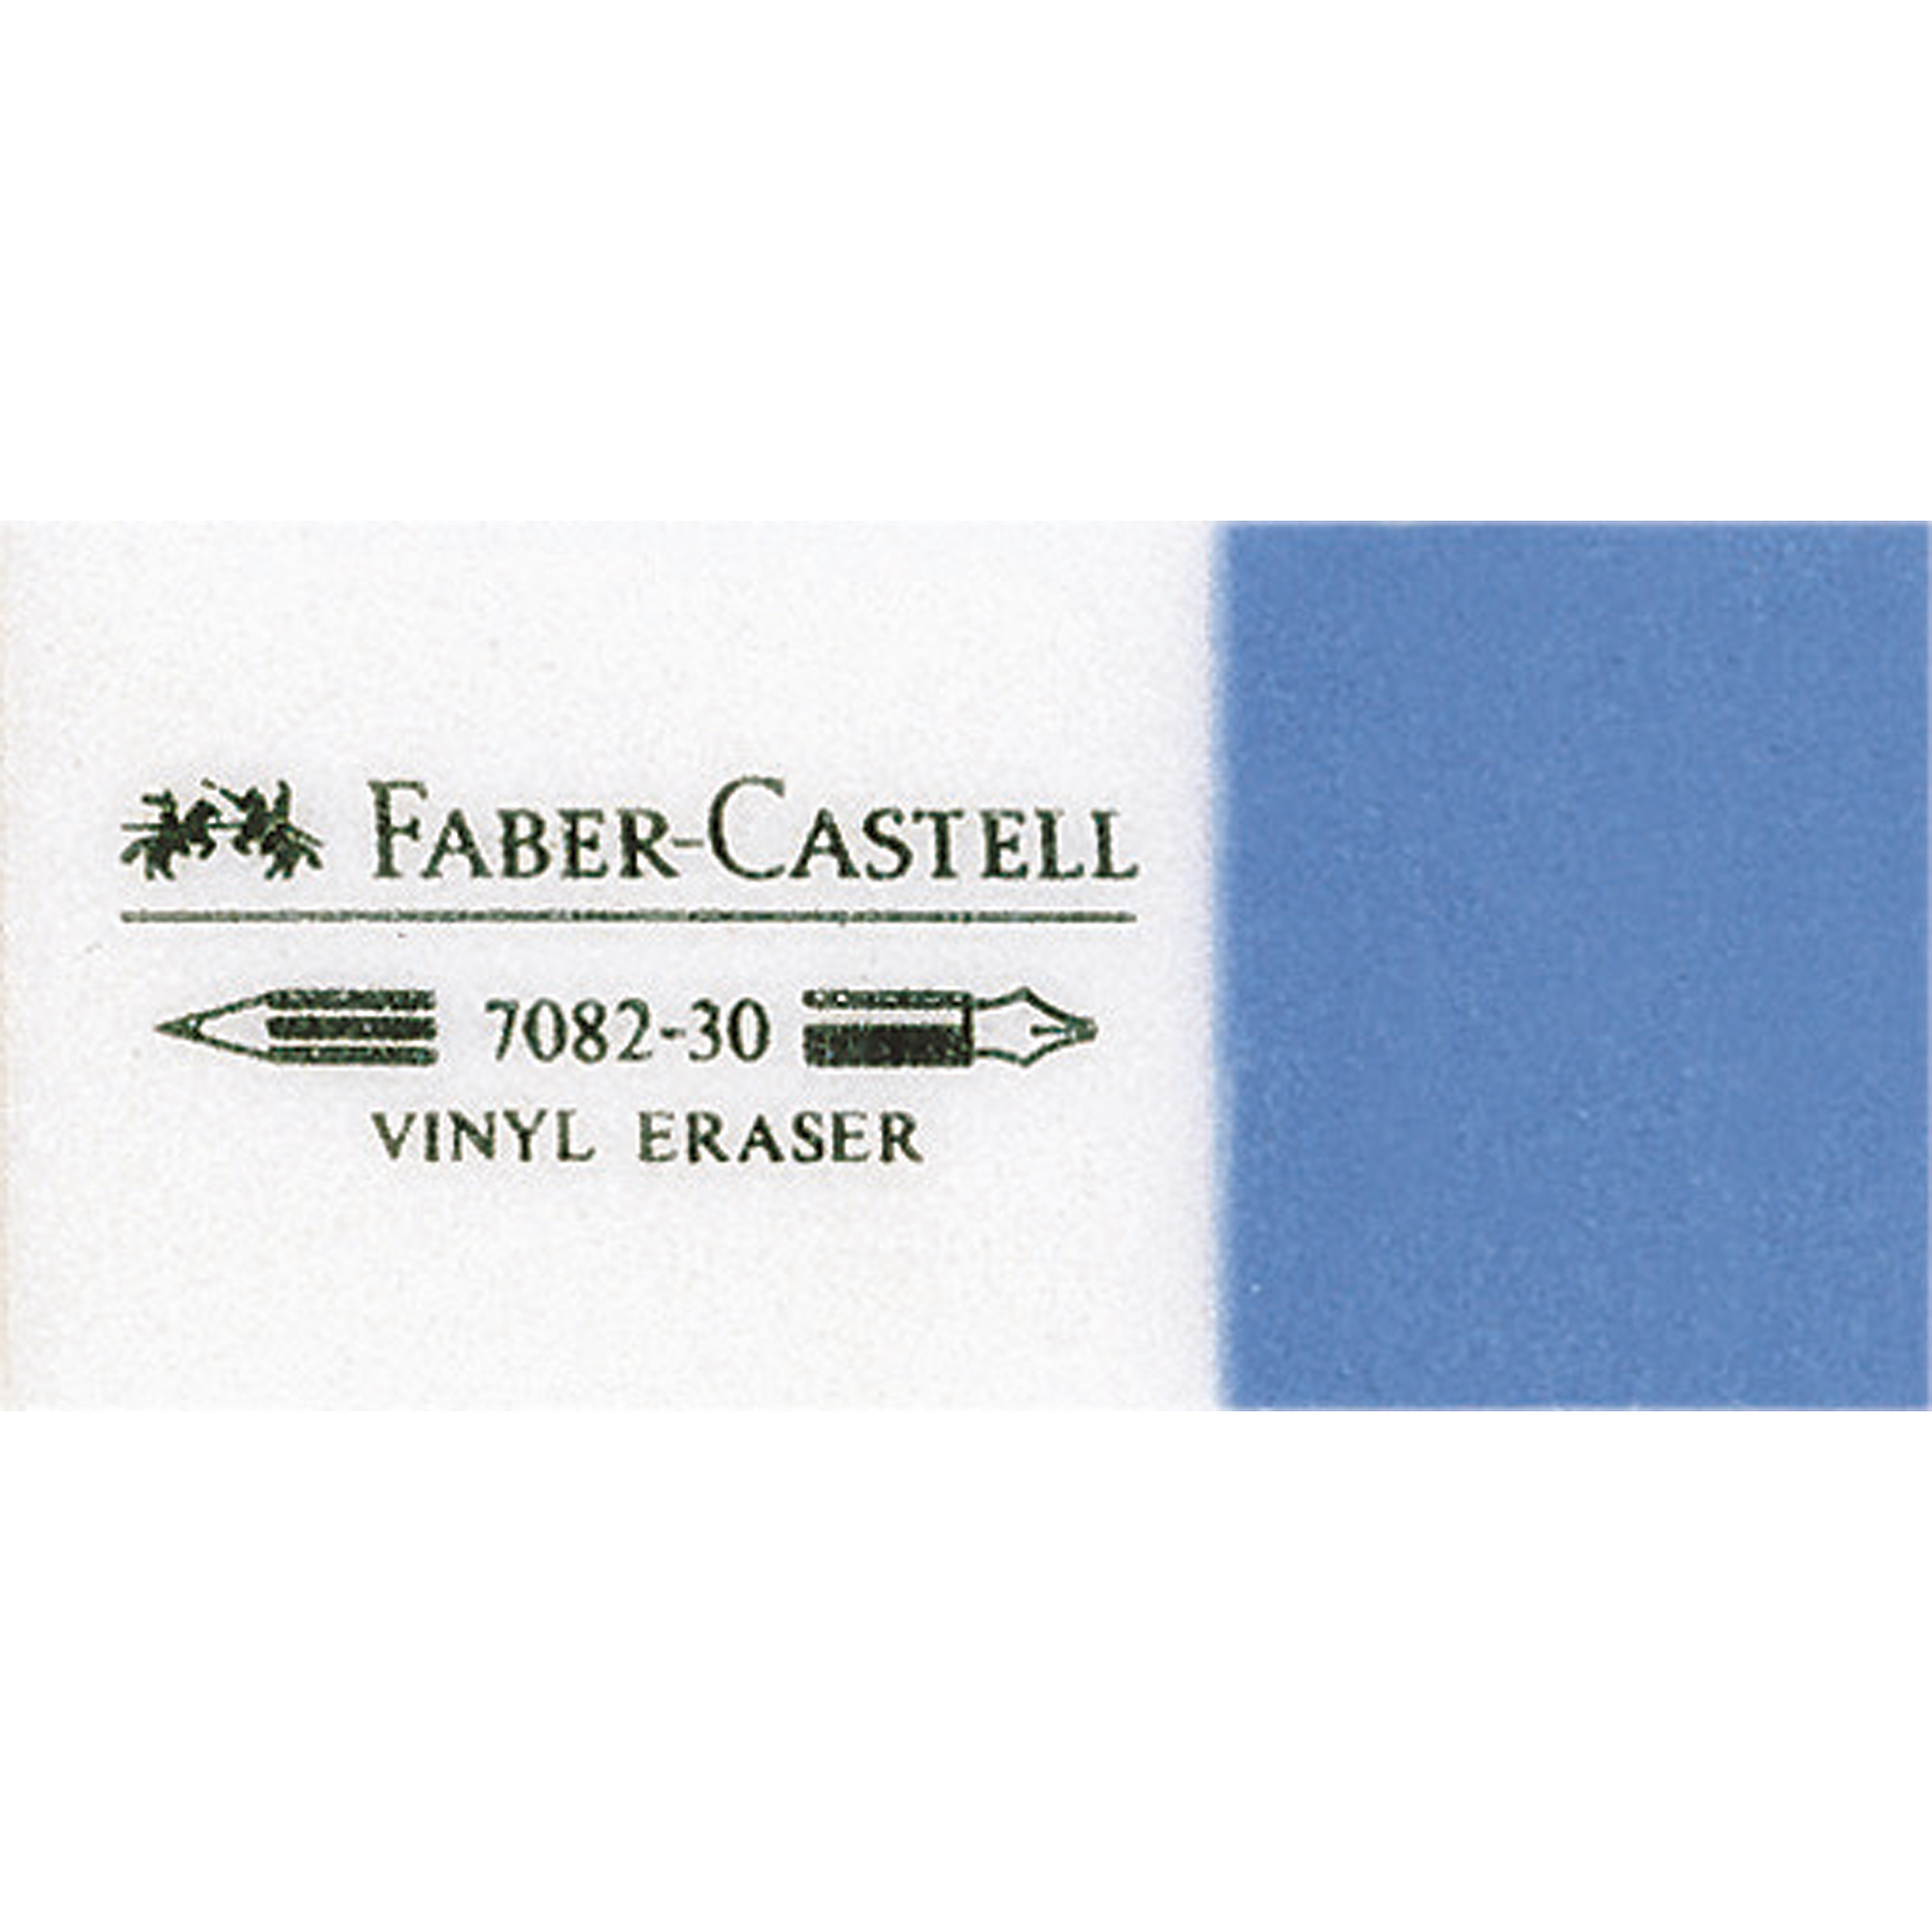 Faber-Castell Radierer KOMBI 7082-30